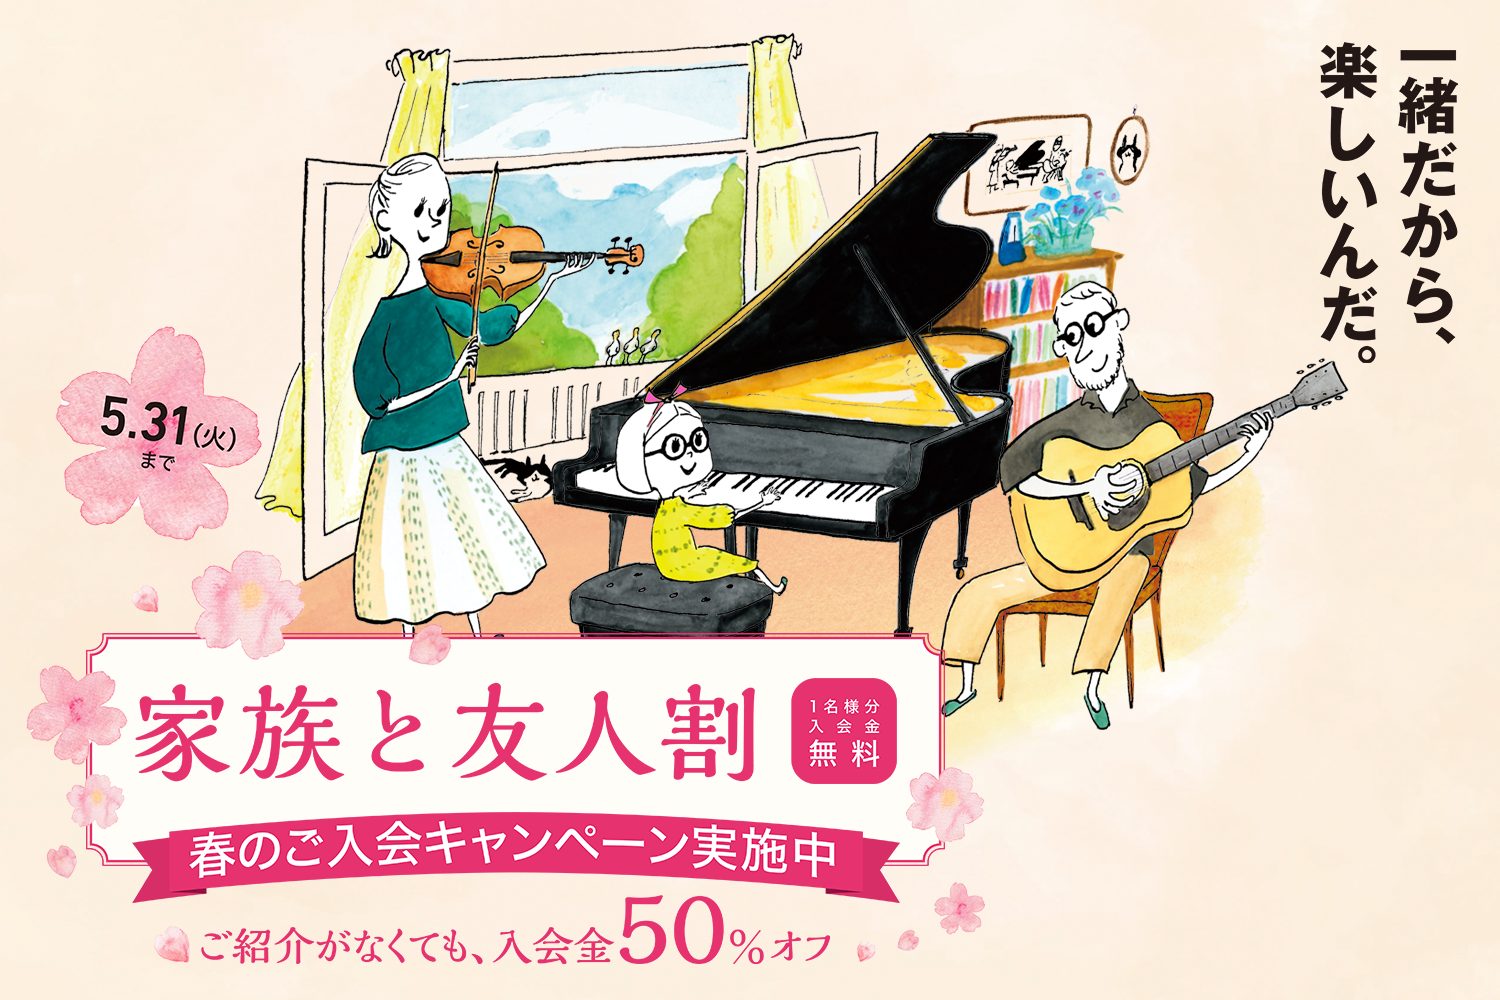 *[https://www.shimamura.co.jp/shop/hinode/lesson-info/20210111/4888::title=【音楽教室】ウイルス感染防止対策について] 「音楽を楽しみたい」そう思ったときが始め時。]]その気持ちを島村楽器の音楽教室がサポートいたします。]]音 […]